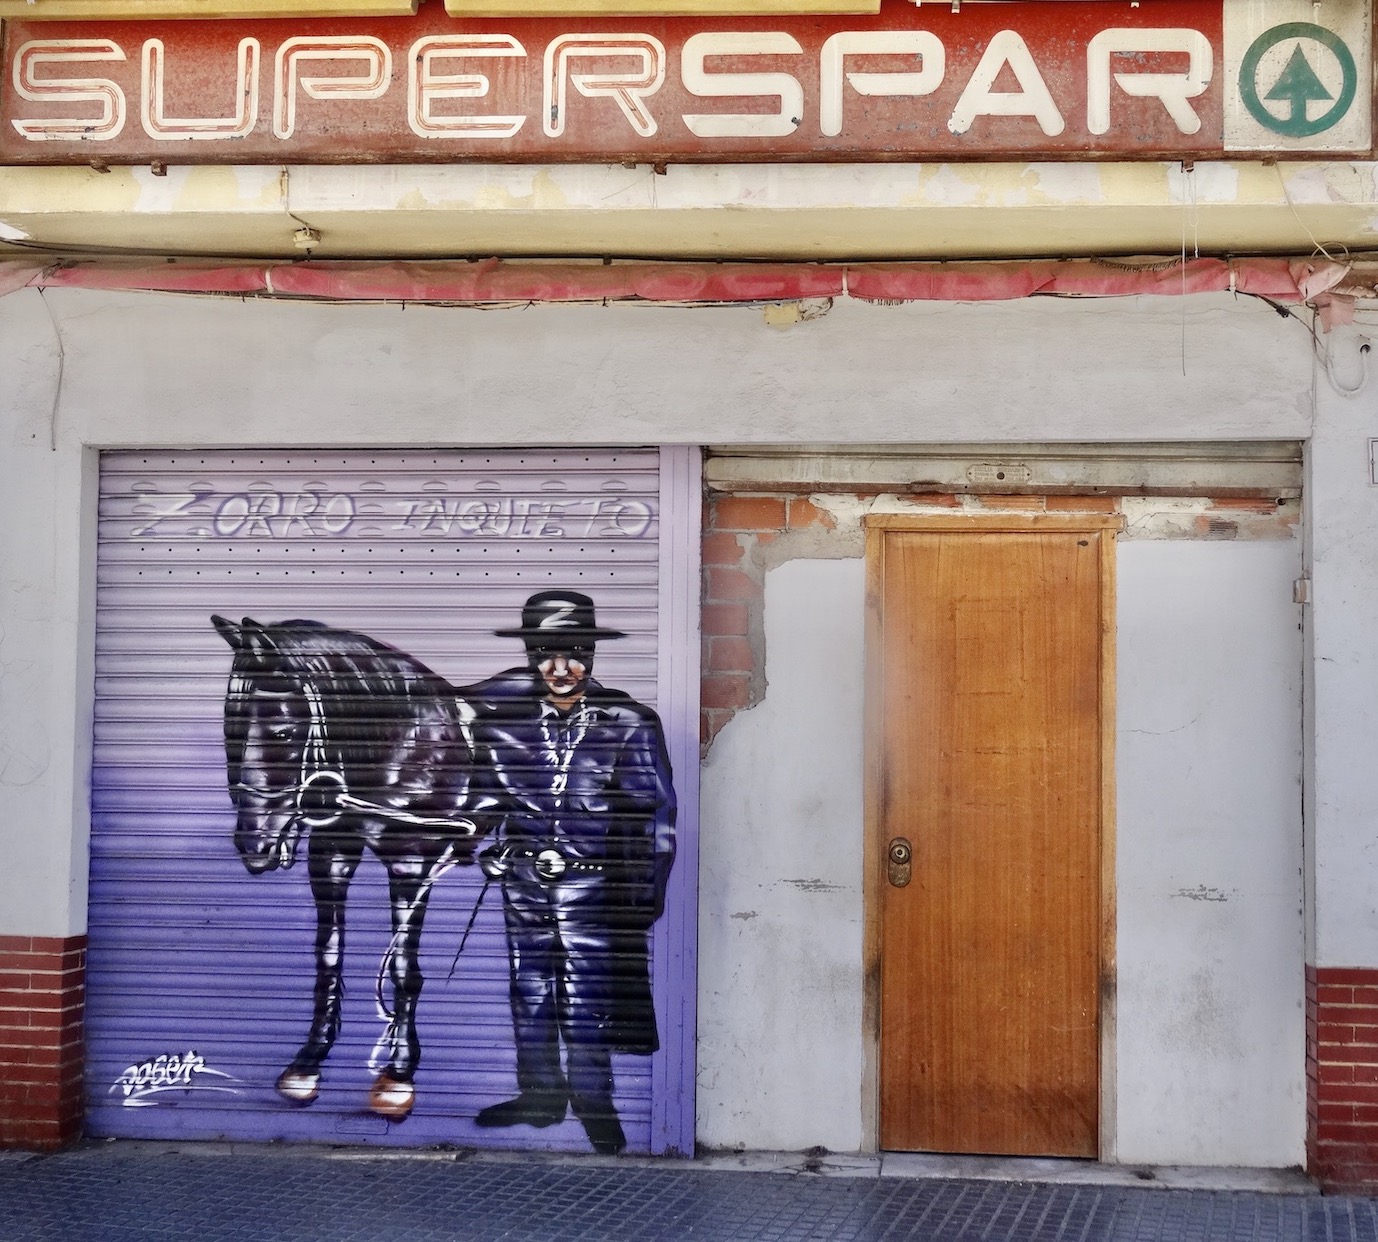 Zorro Inquieto Street art Malaga.